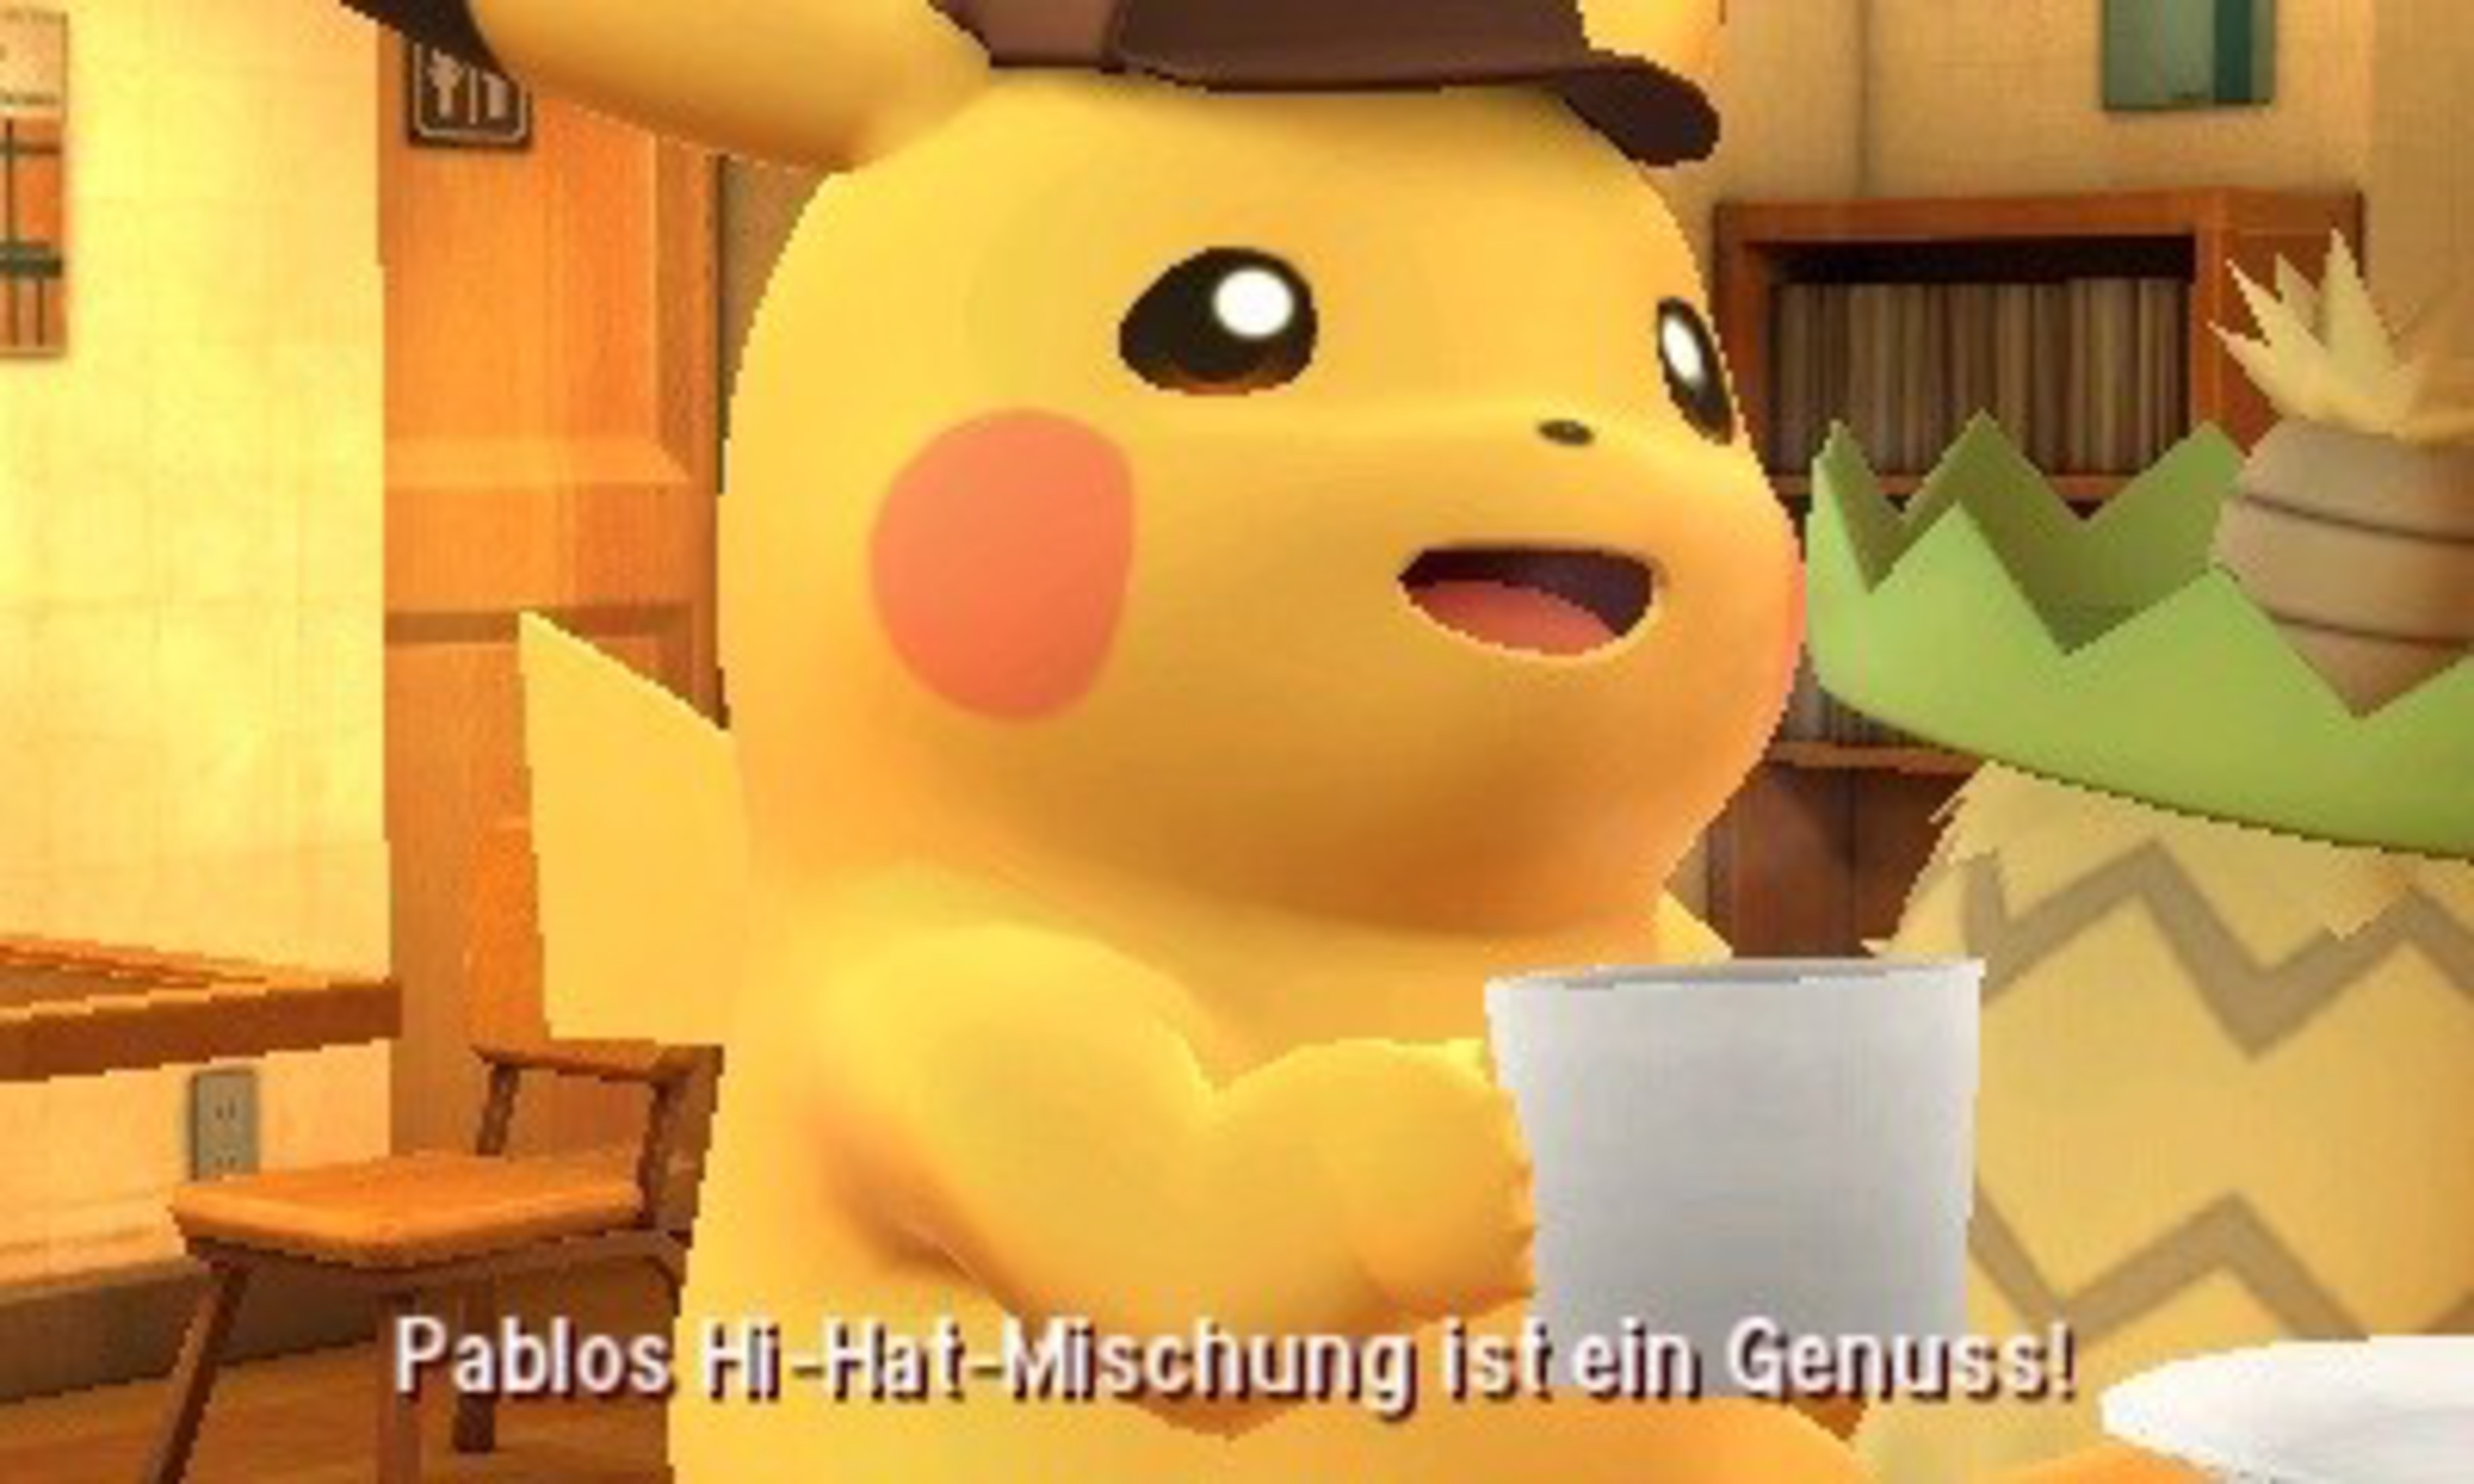 Pikachu [Nintendo 3DS] Meisterdetektiv -